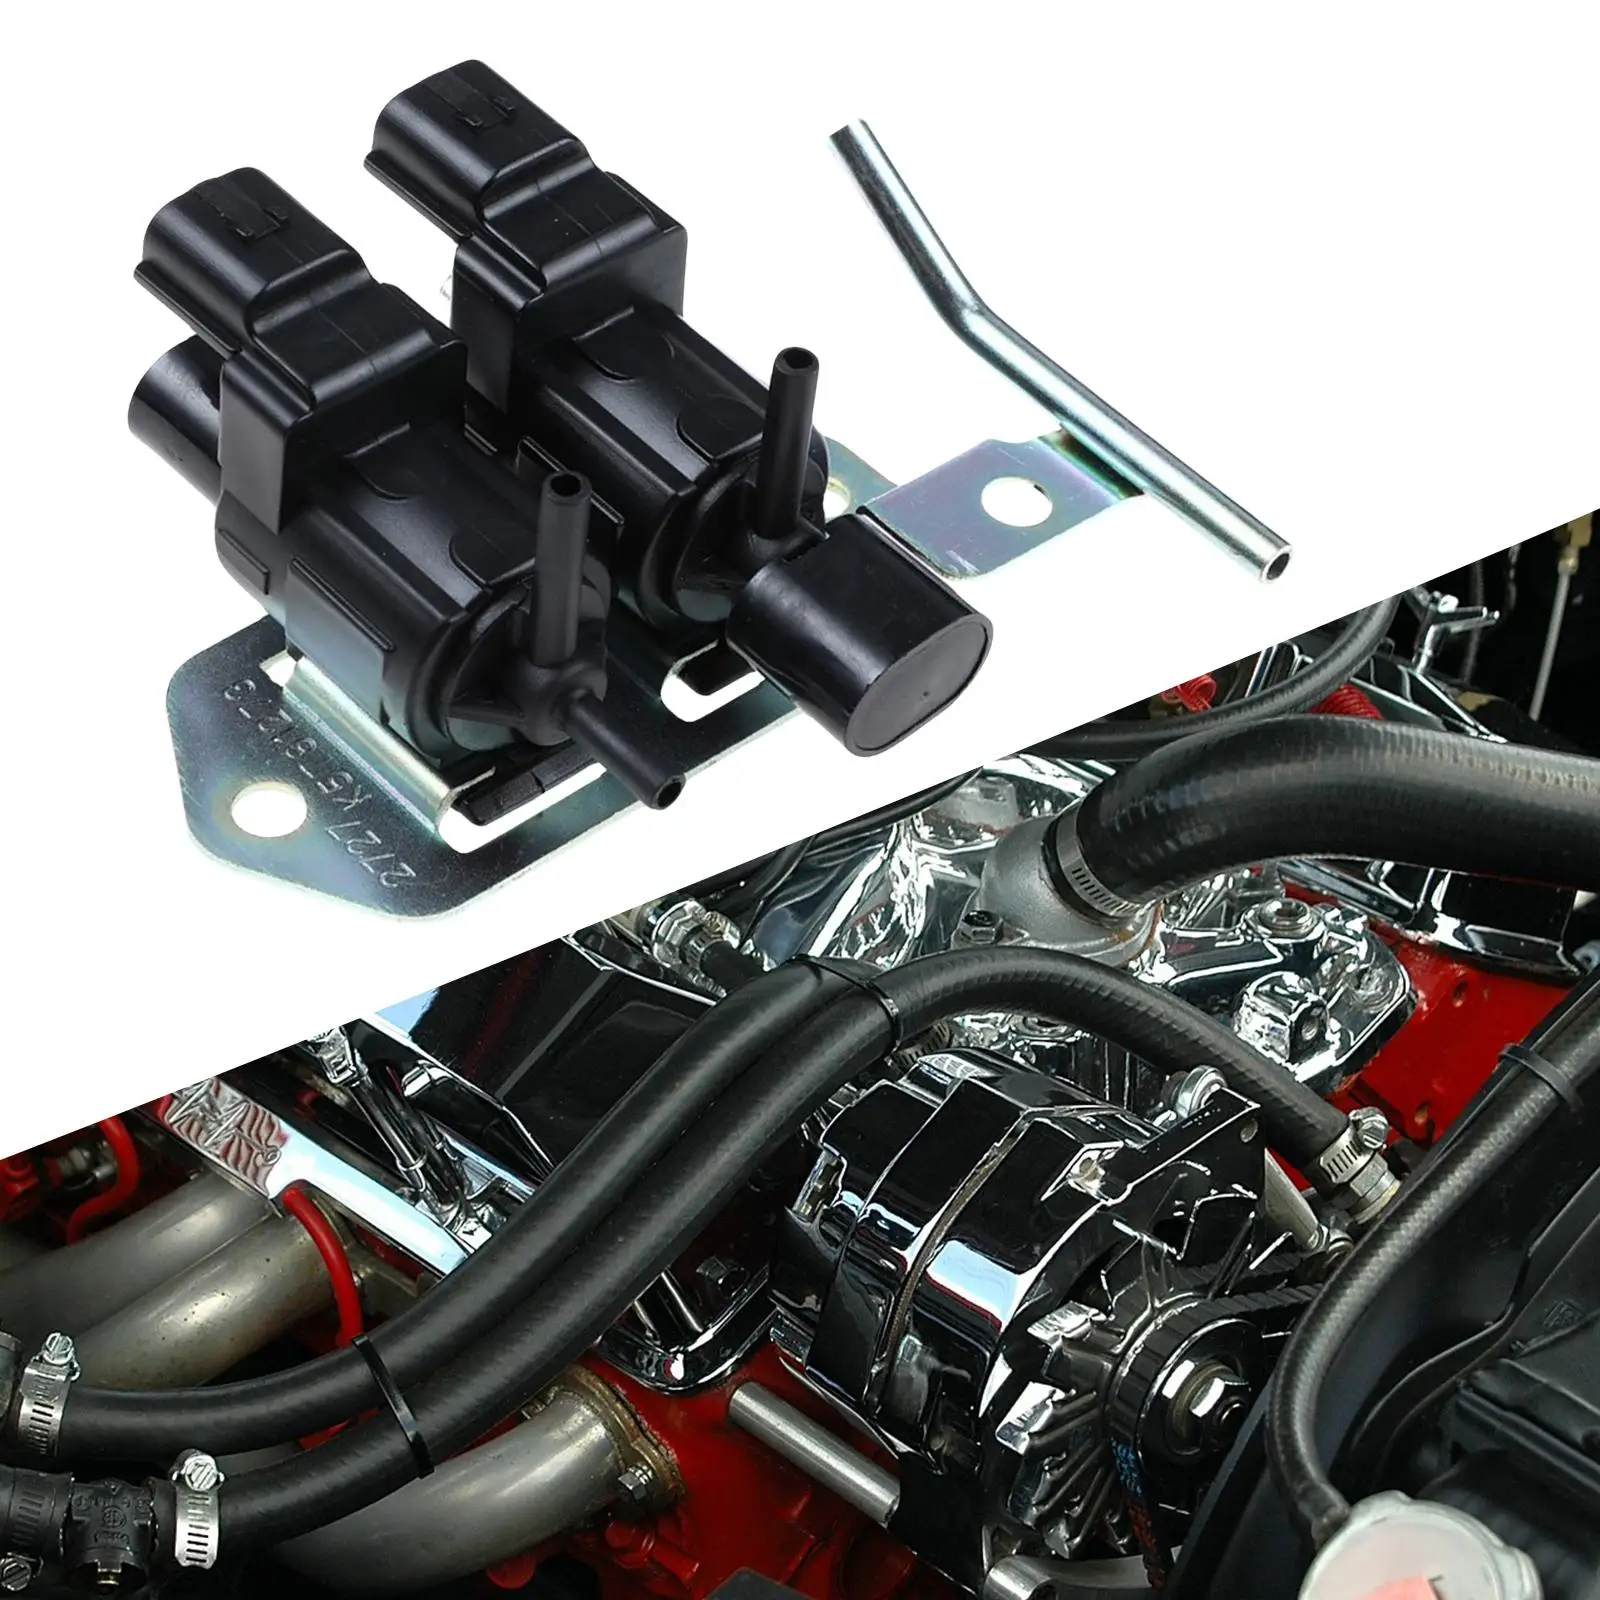 Auto Clutch 4WD Select Control Solenoid Valve Parts K5T81273 MR534632 Fits for Mitsubishi IO Pajero Pinin 1999-2005